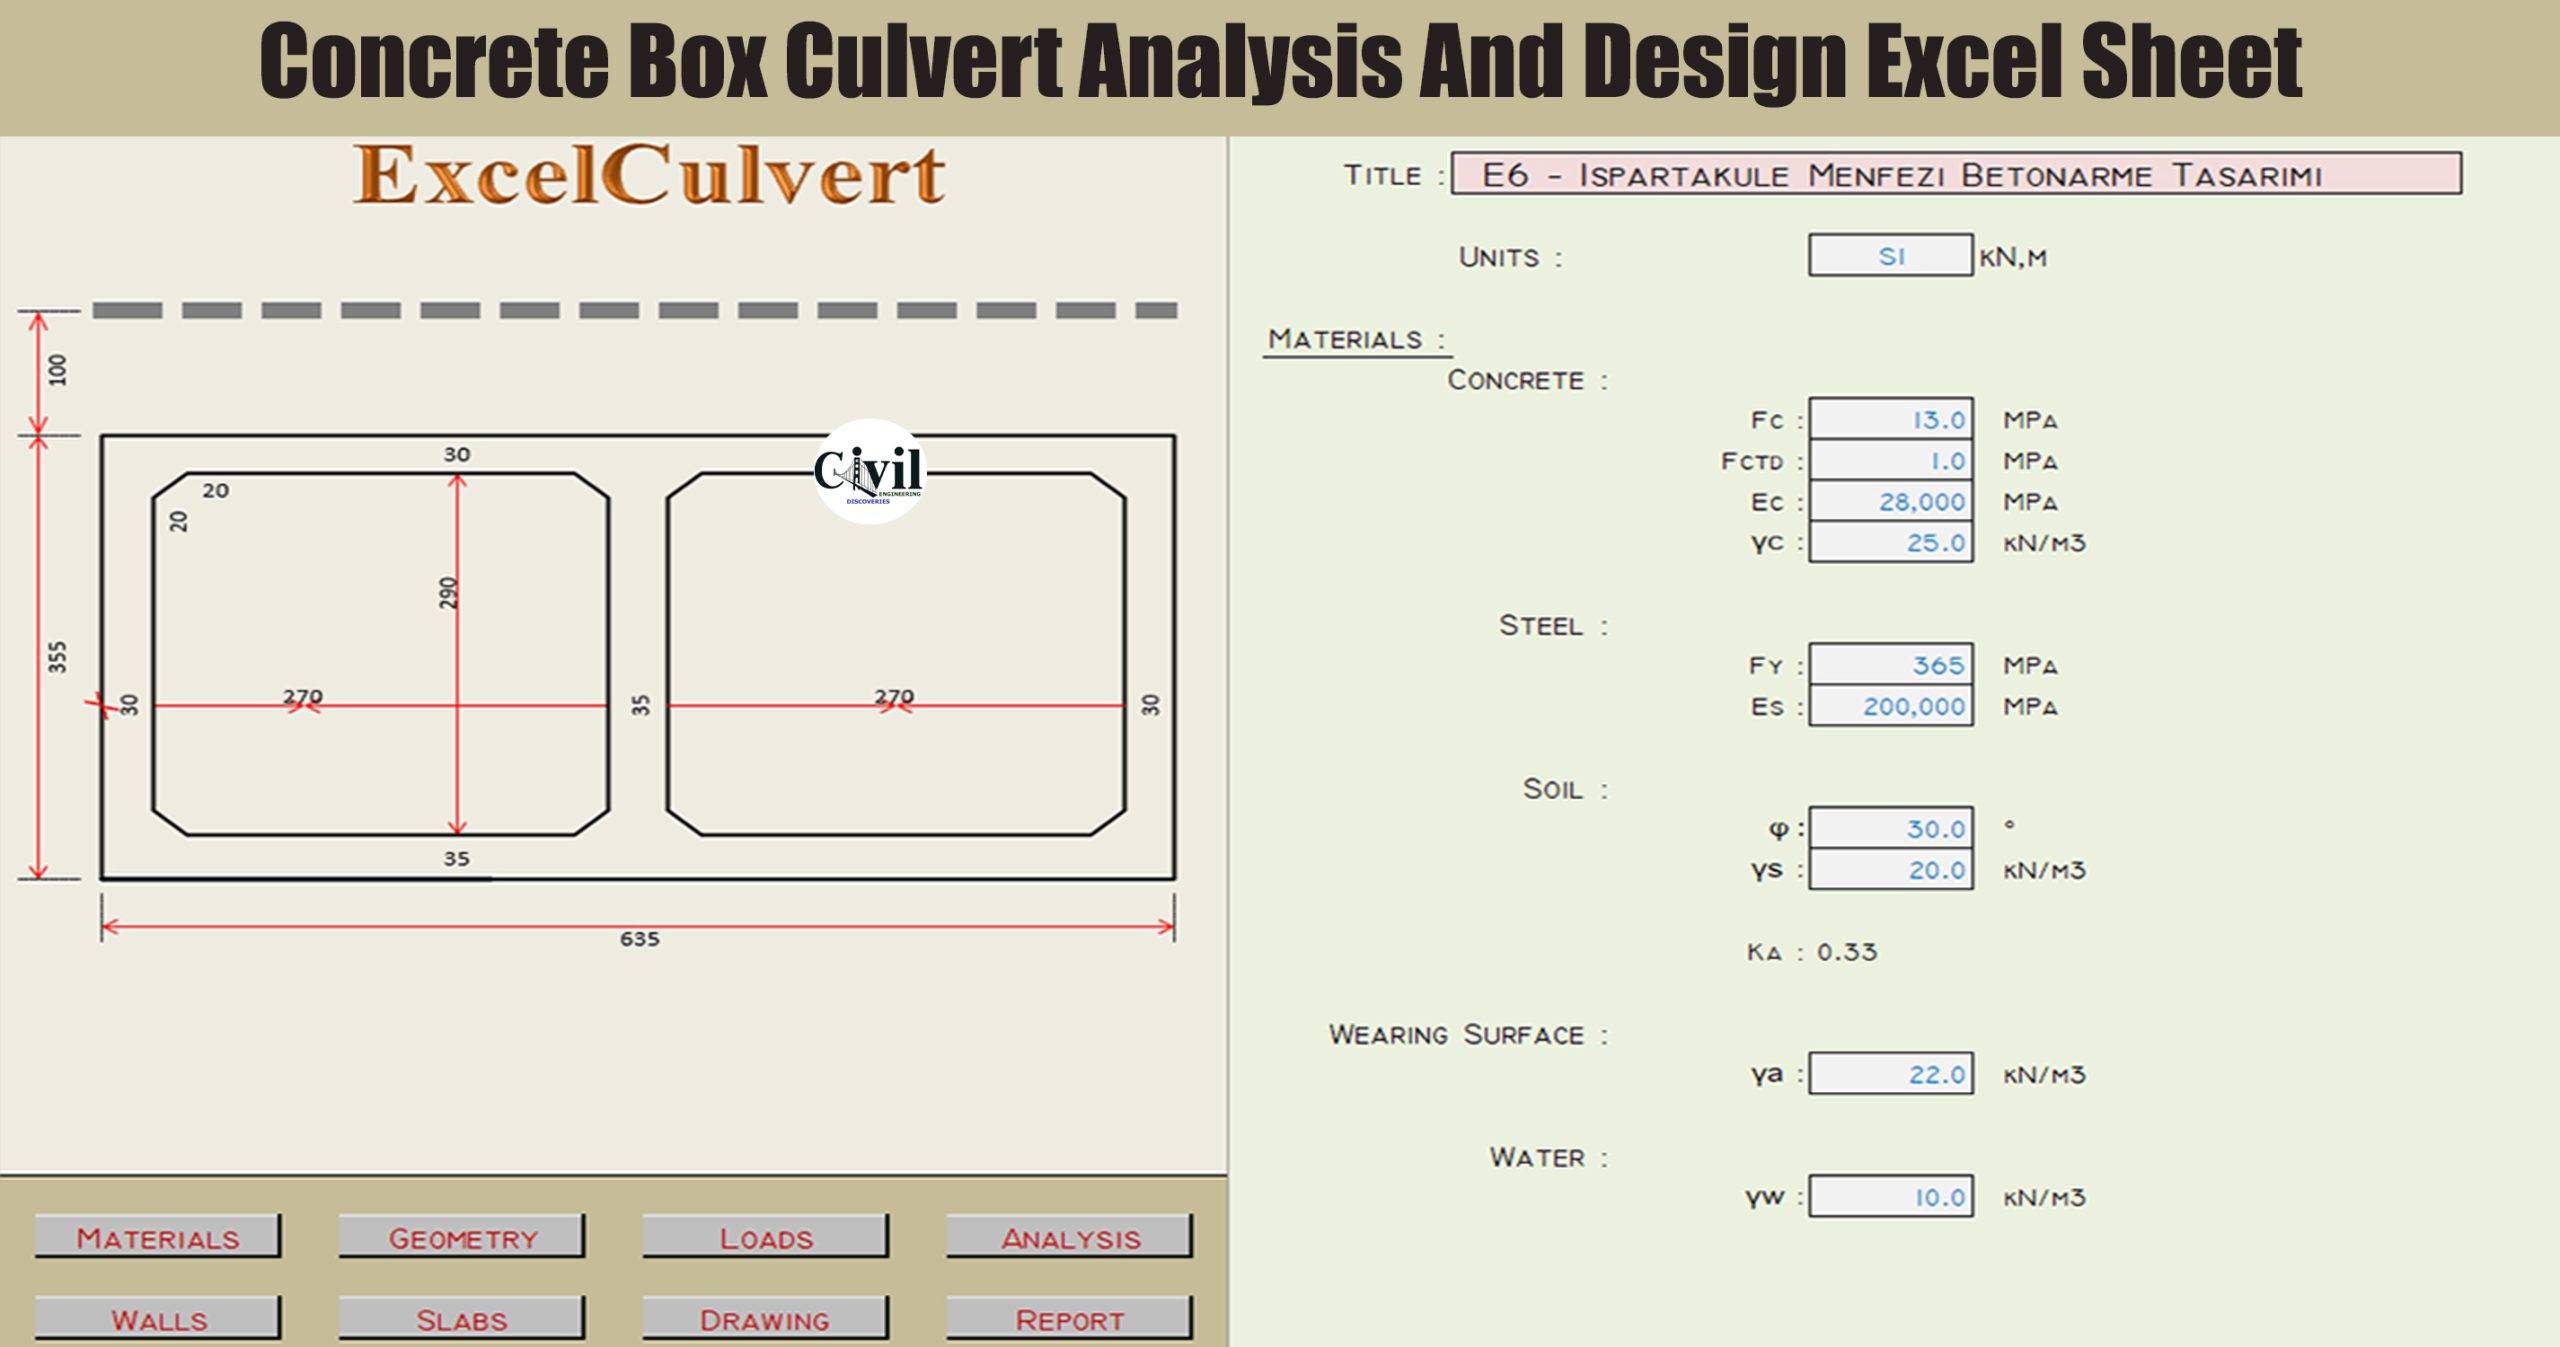 analysis of box culvert